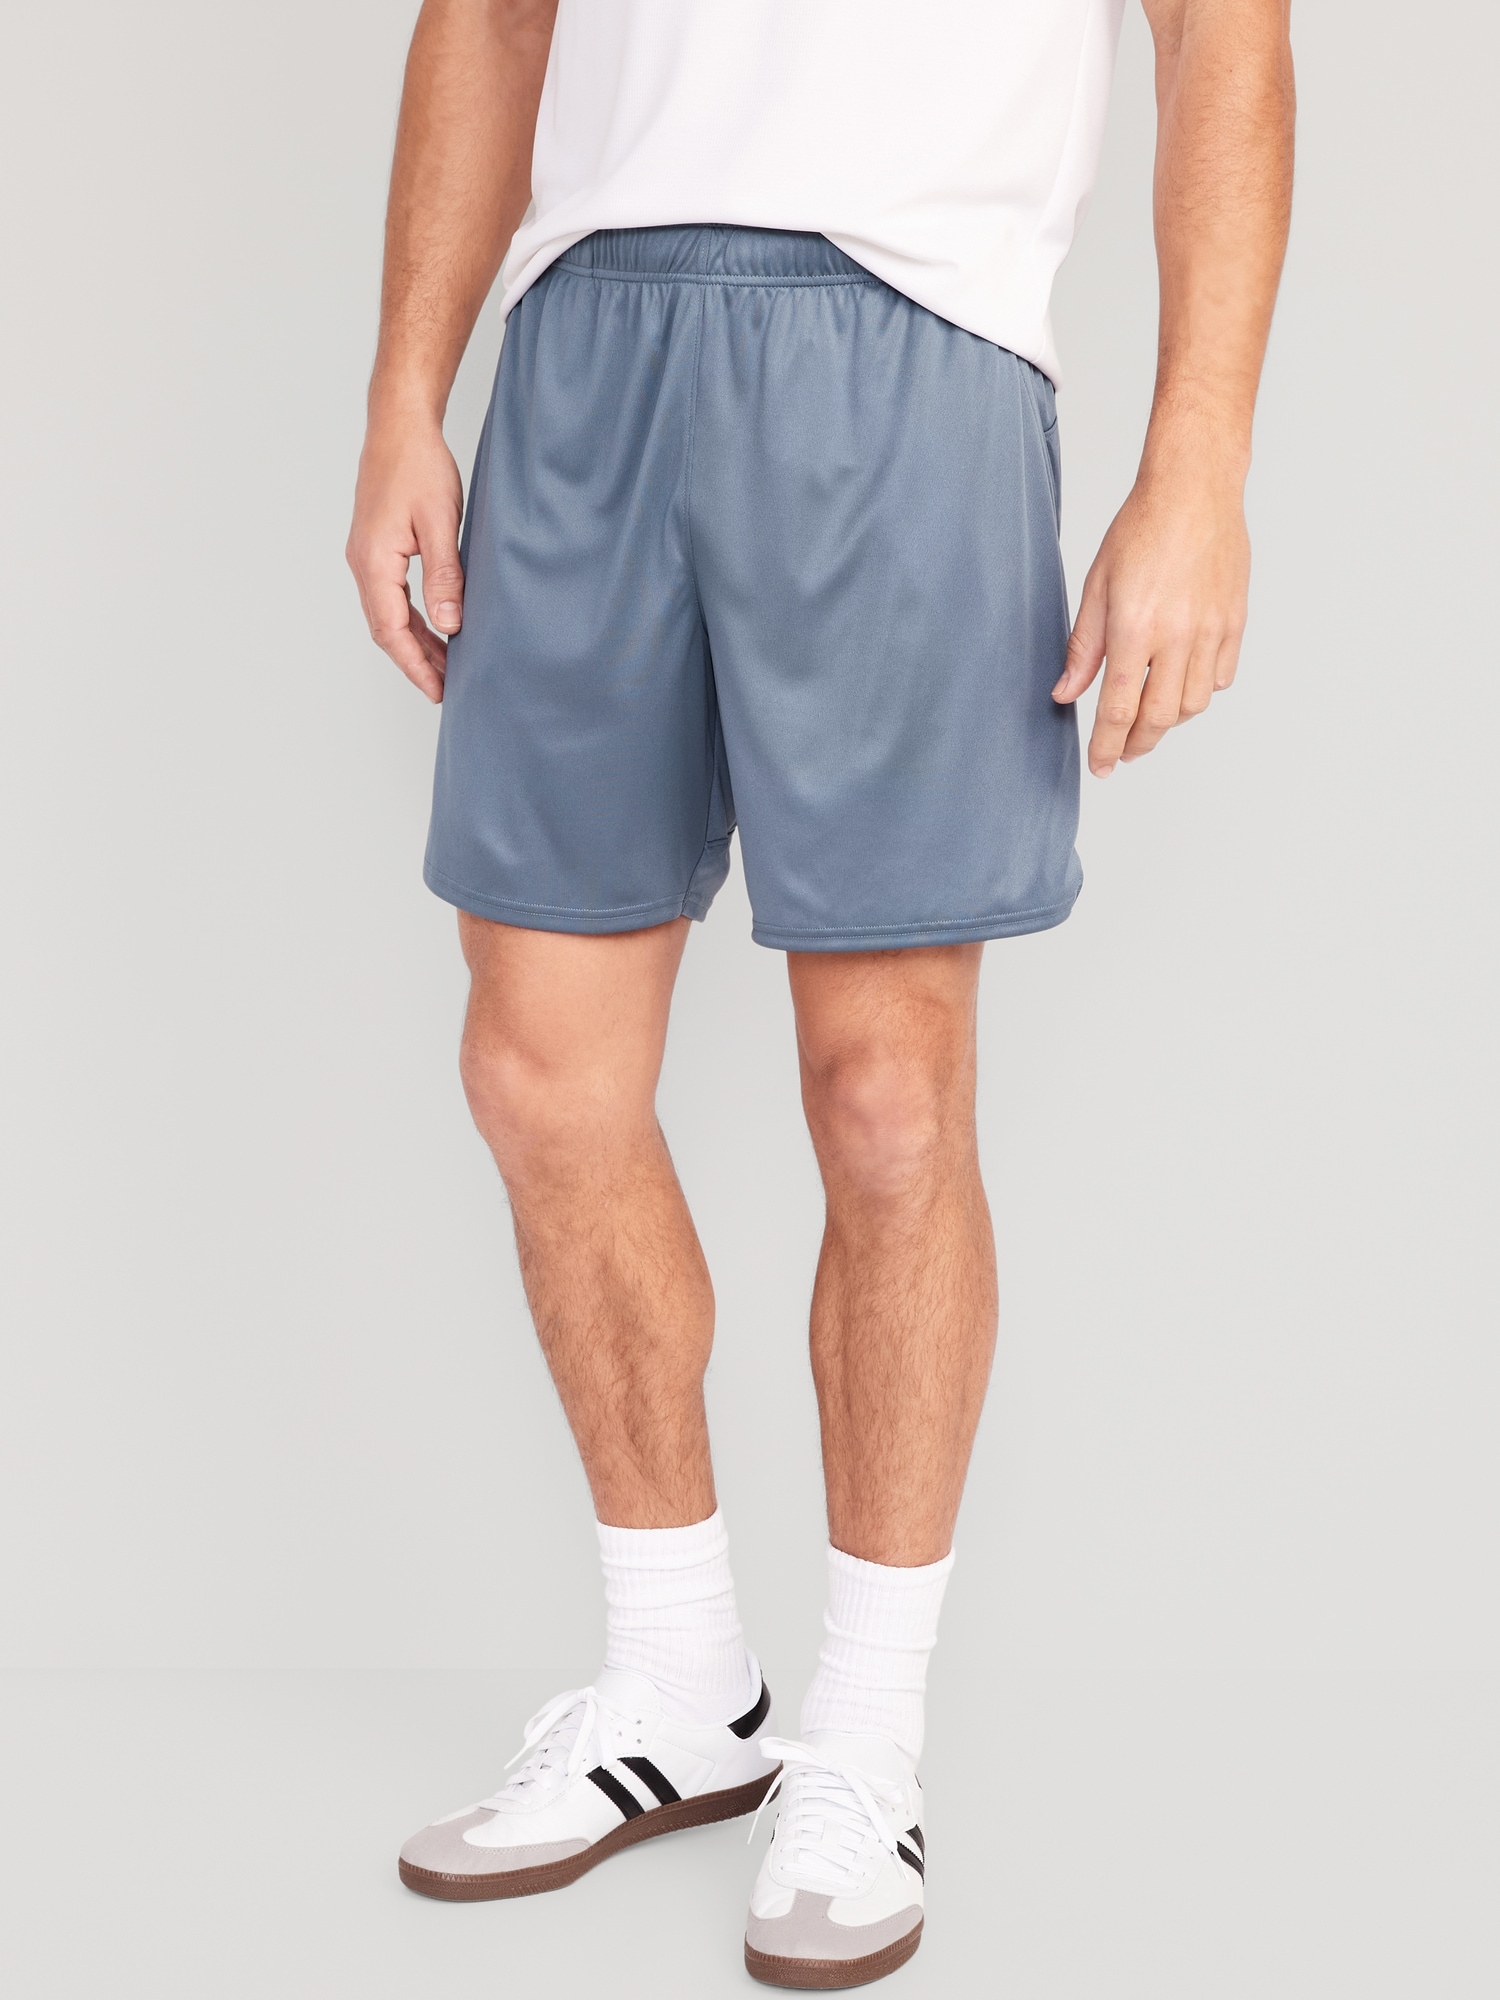 Old Navy Go-Dry Mesh Basketball Shorts for Men -- 7-inch inseam blue. 1